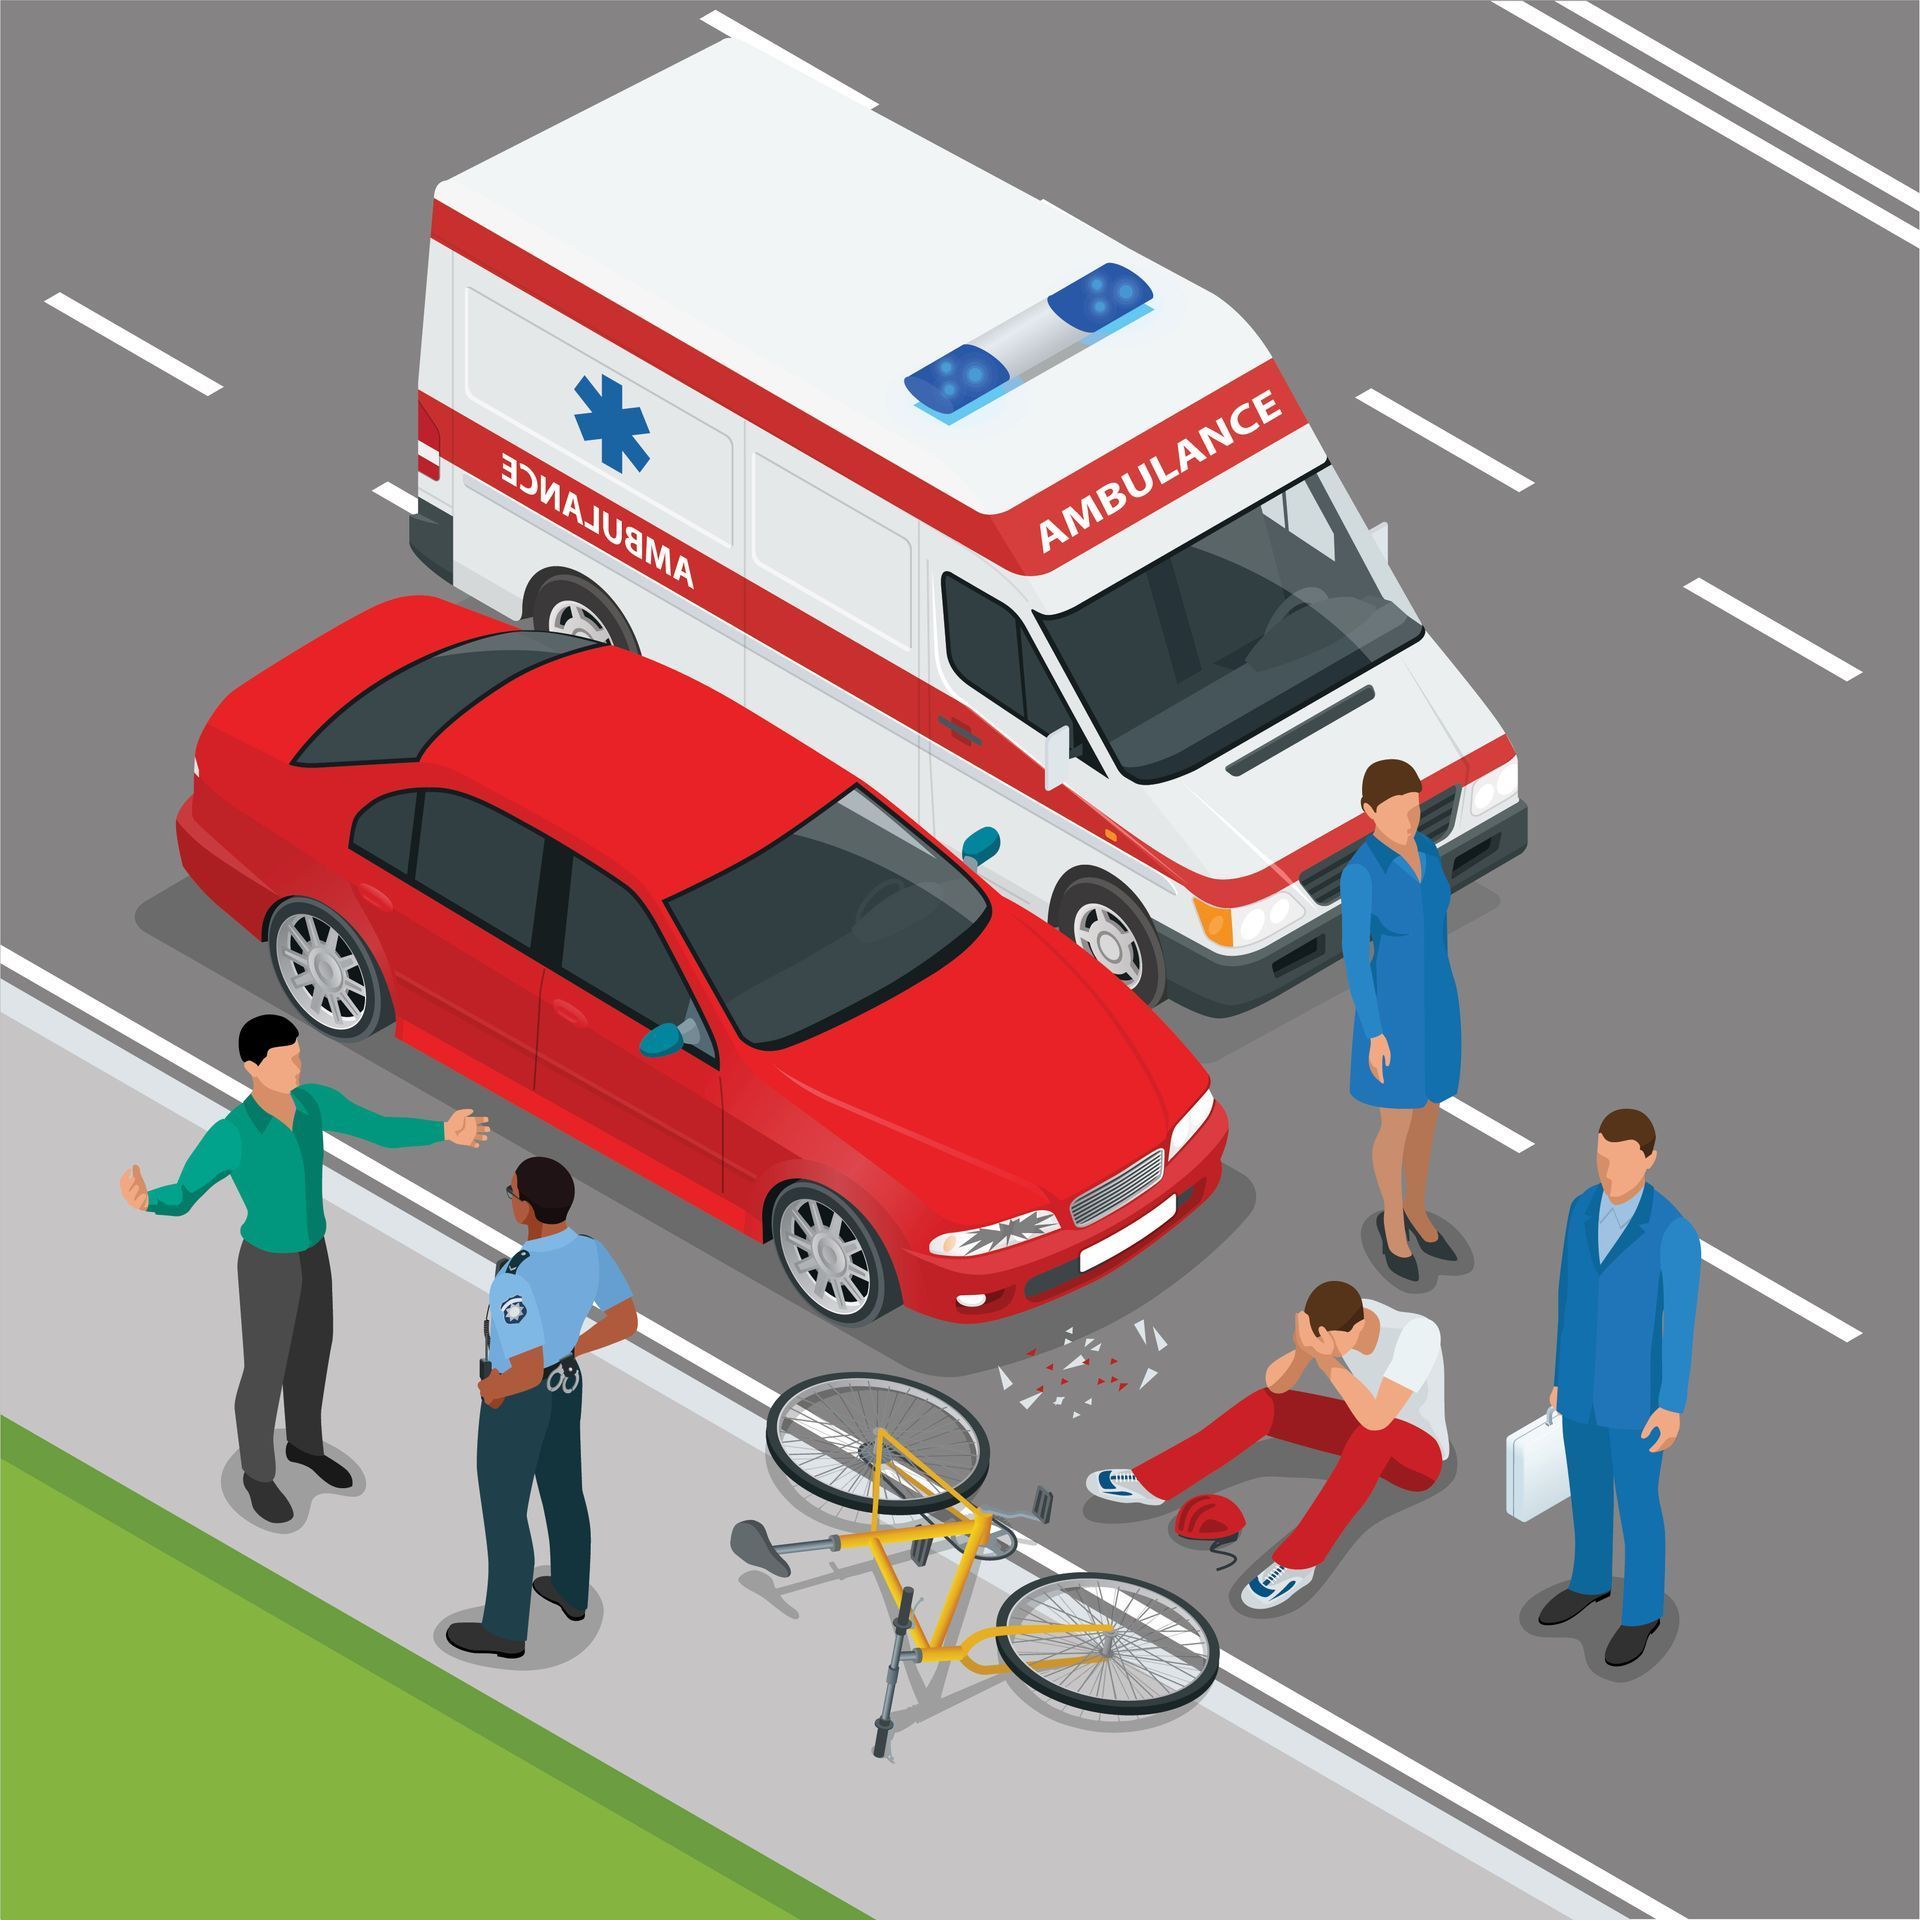 Bicycle accident scene